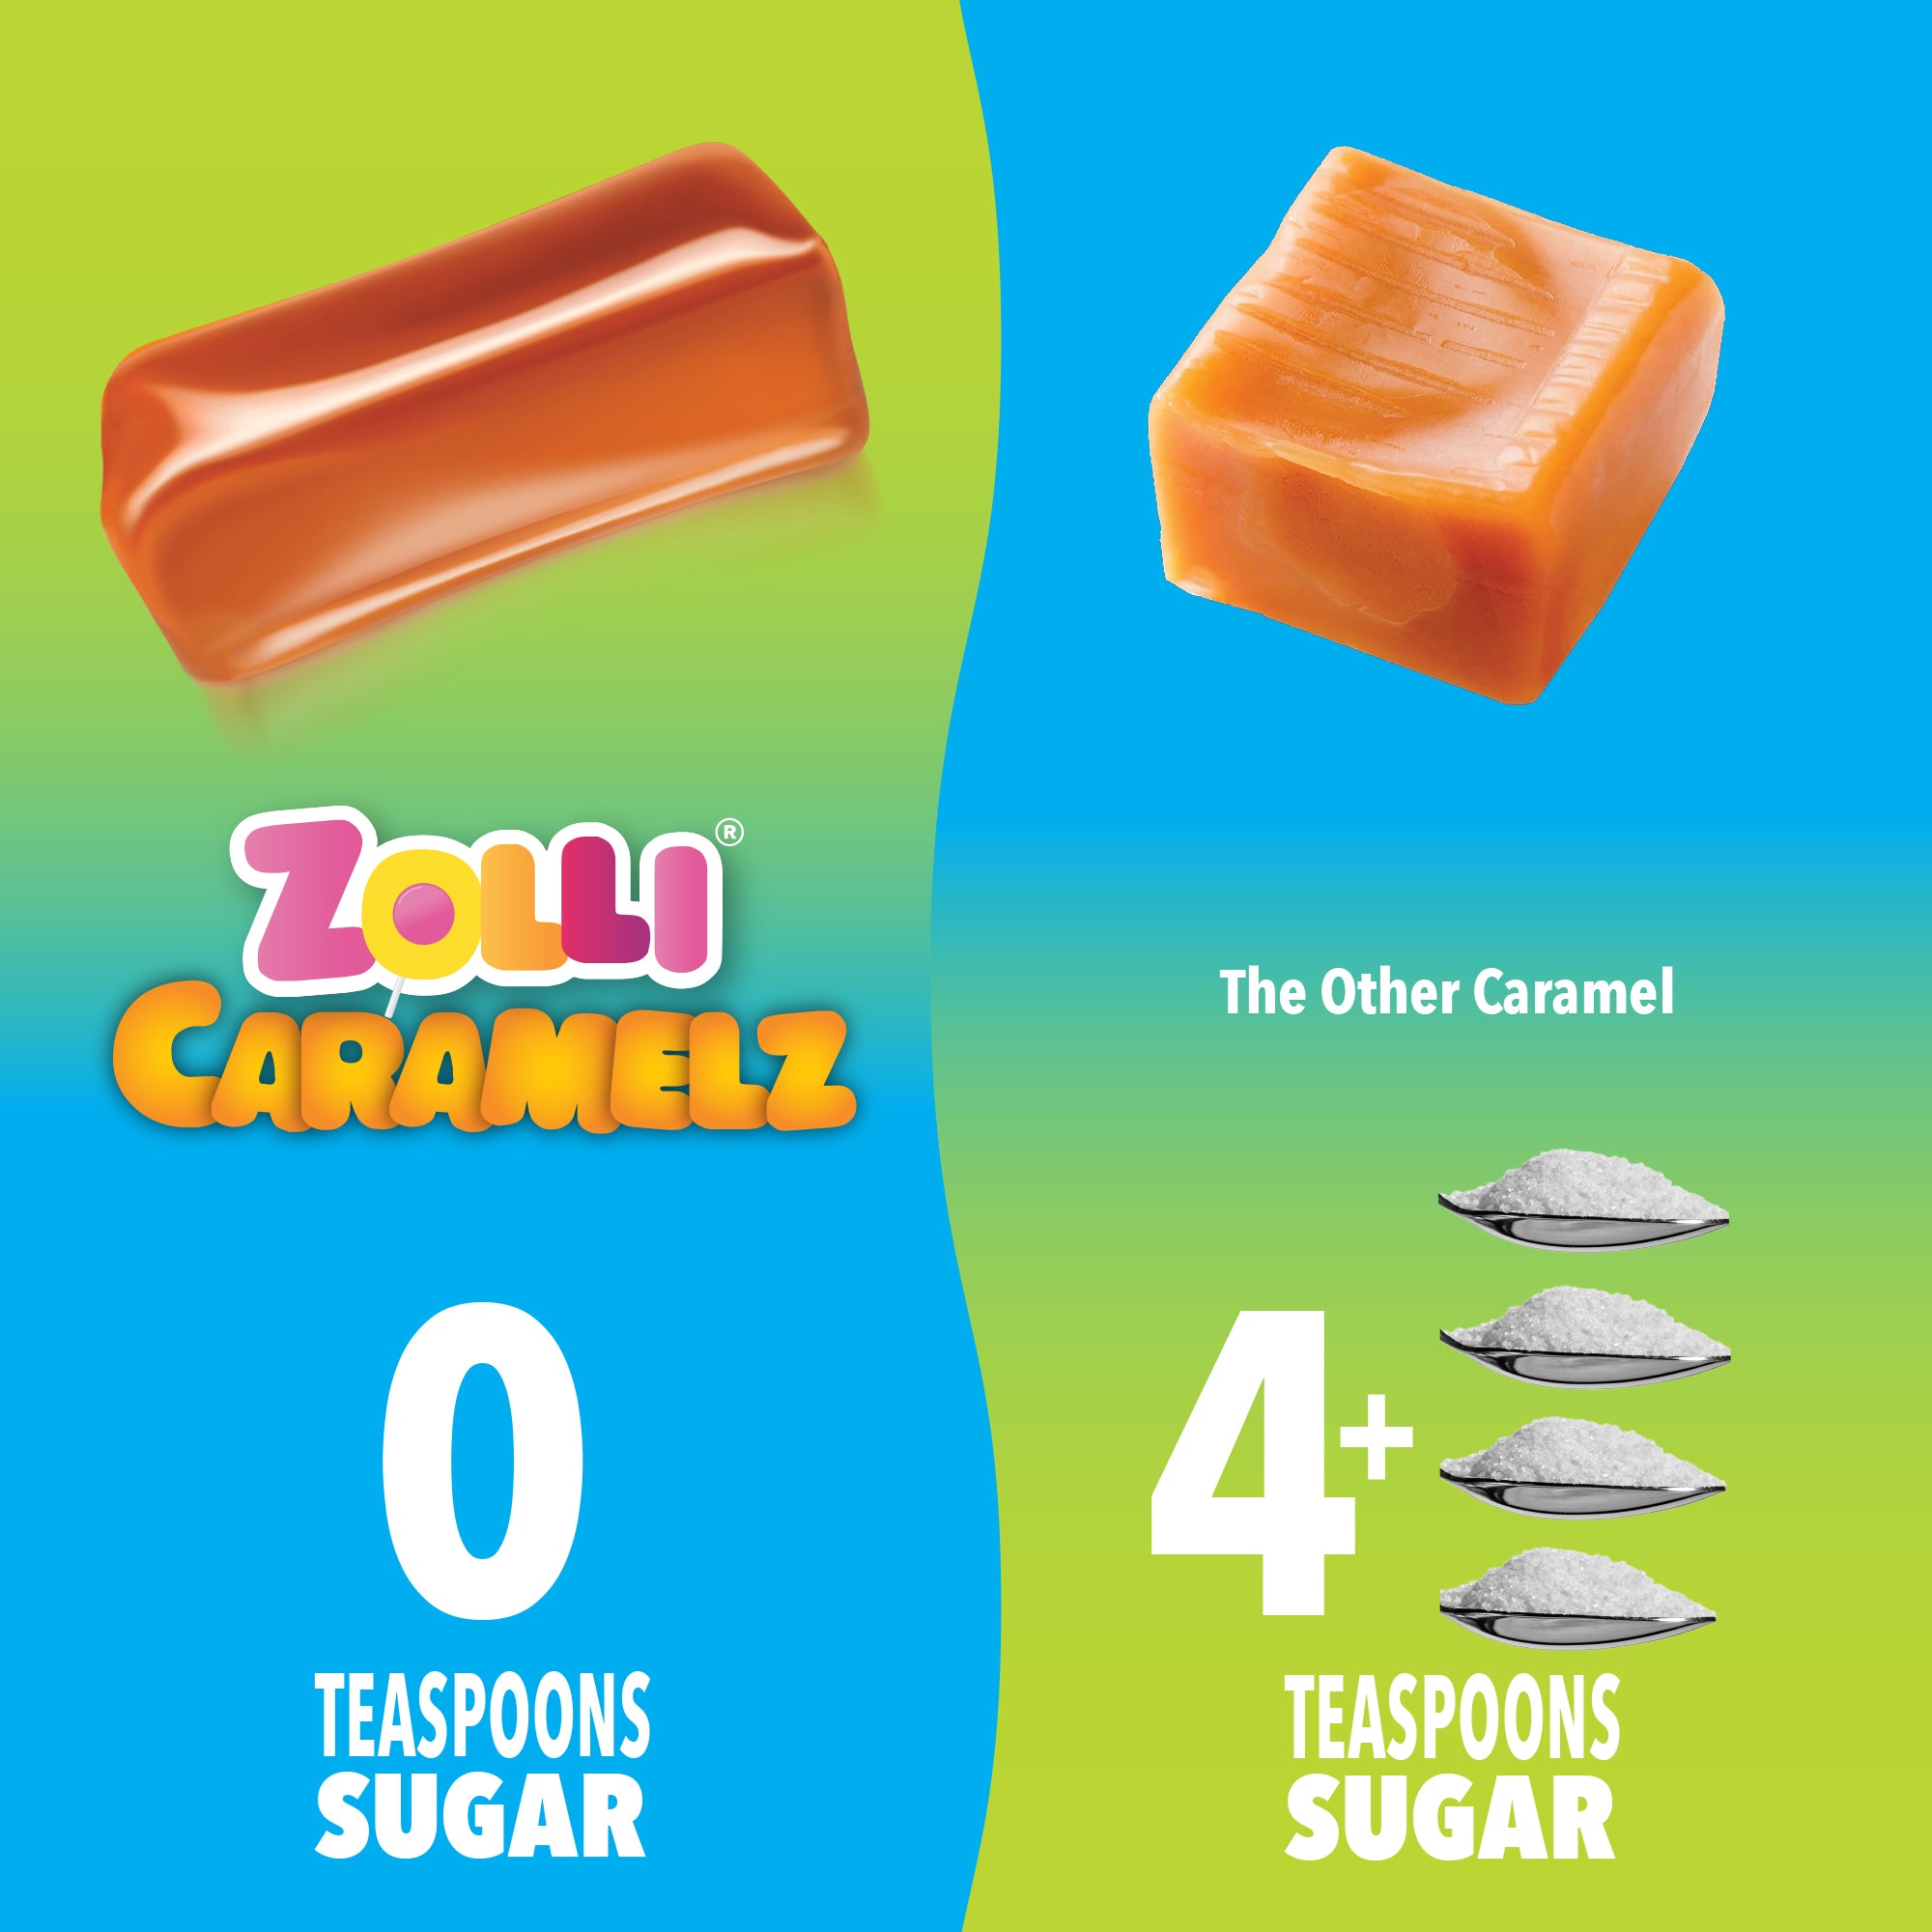 Zolli Caramelz have 0 teaspoons of sugar. Competing caramels have 4+ teaspoons of sugar.